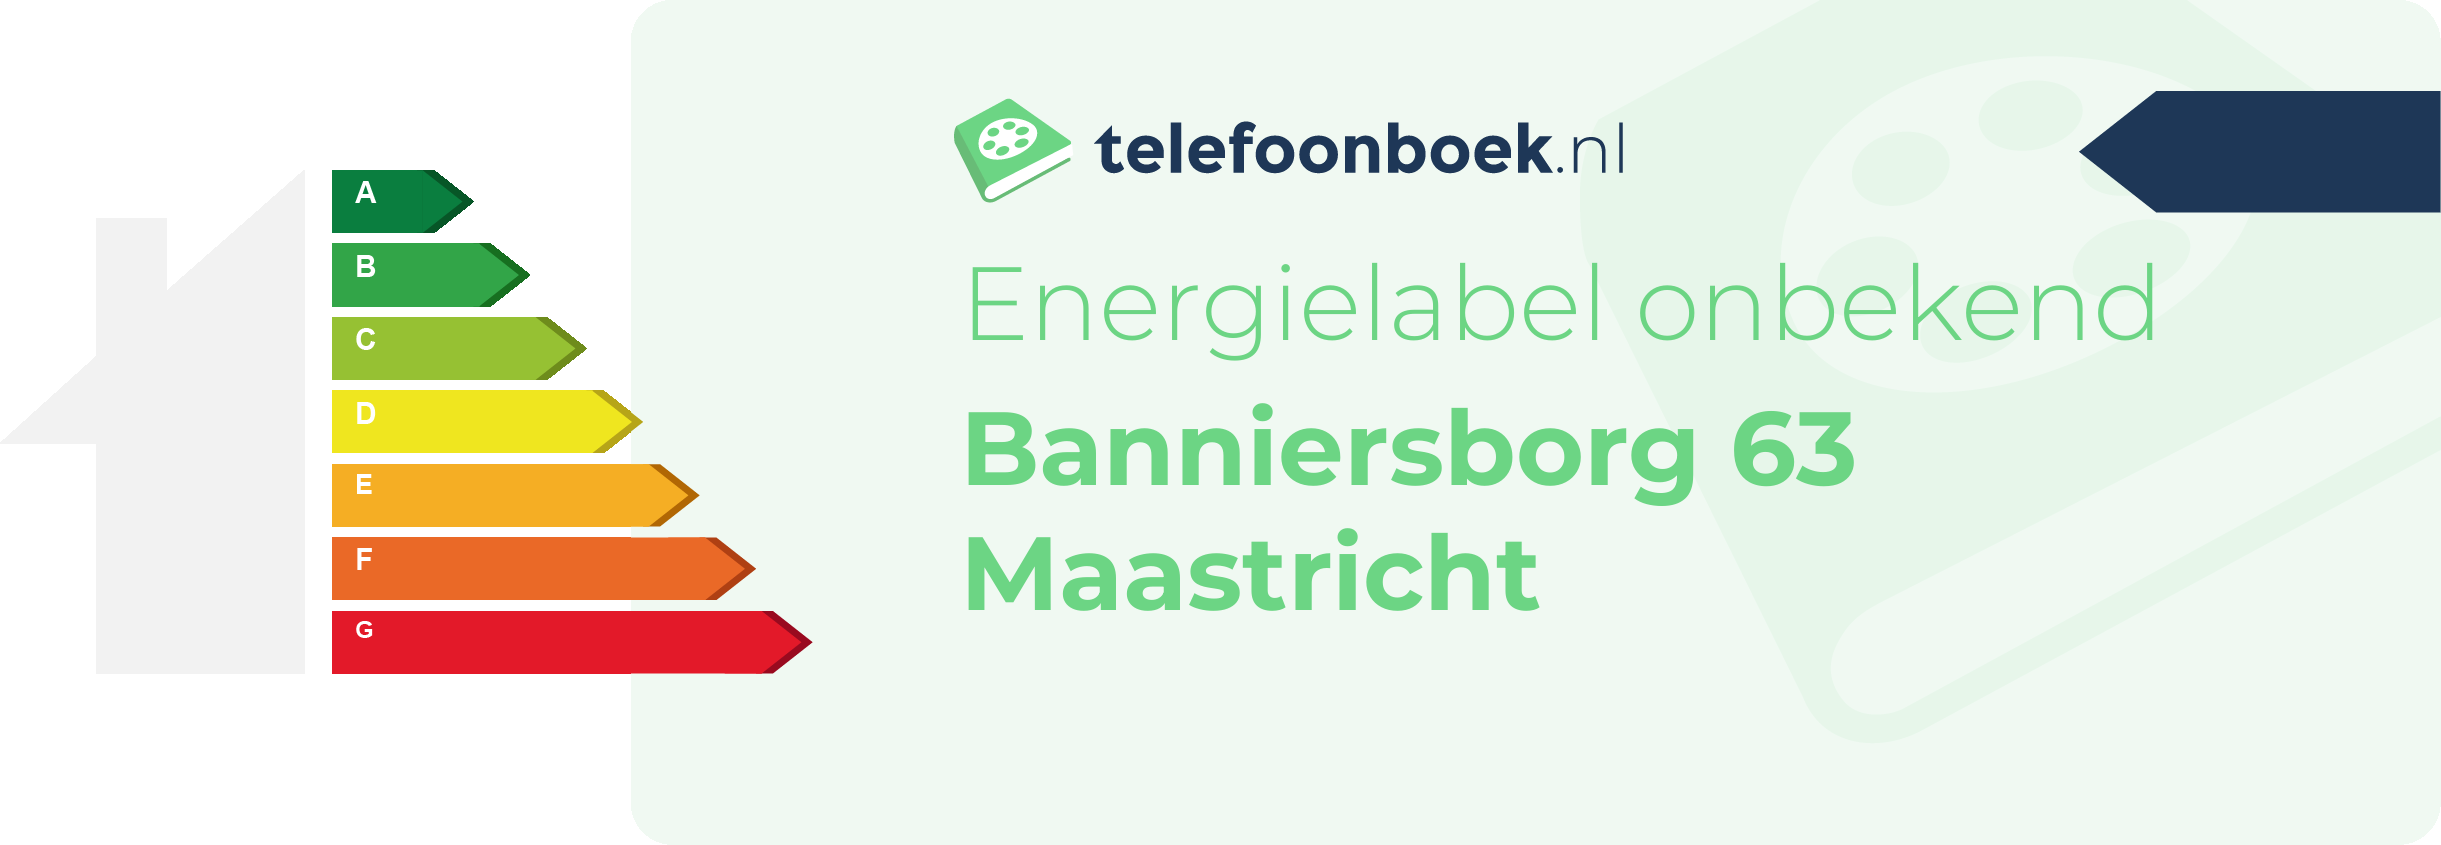 Energielabel Banniersborg 63 Maastricht